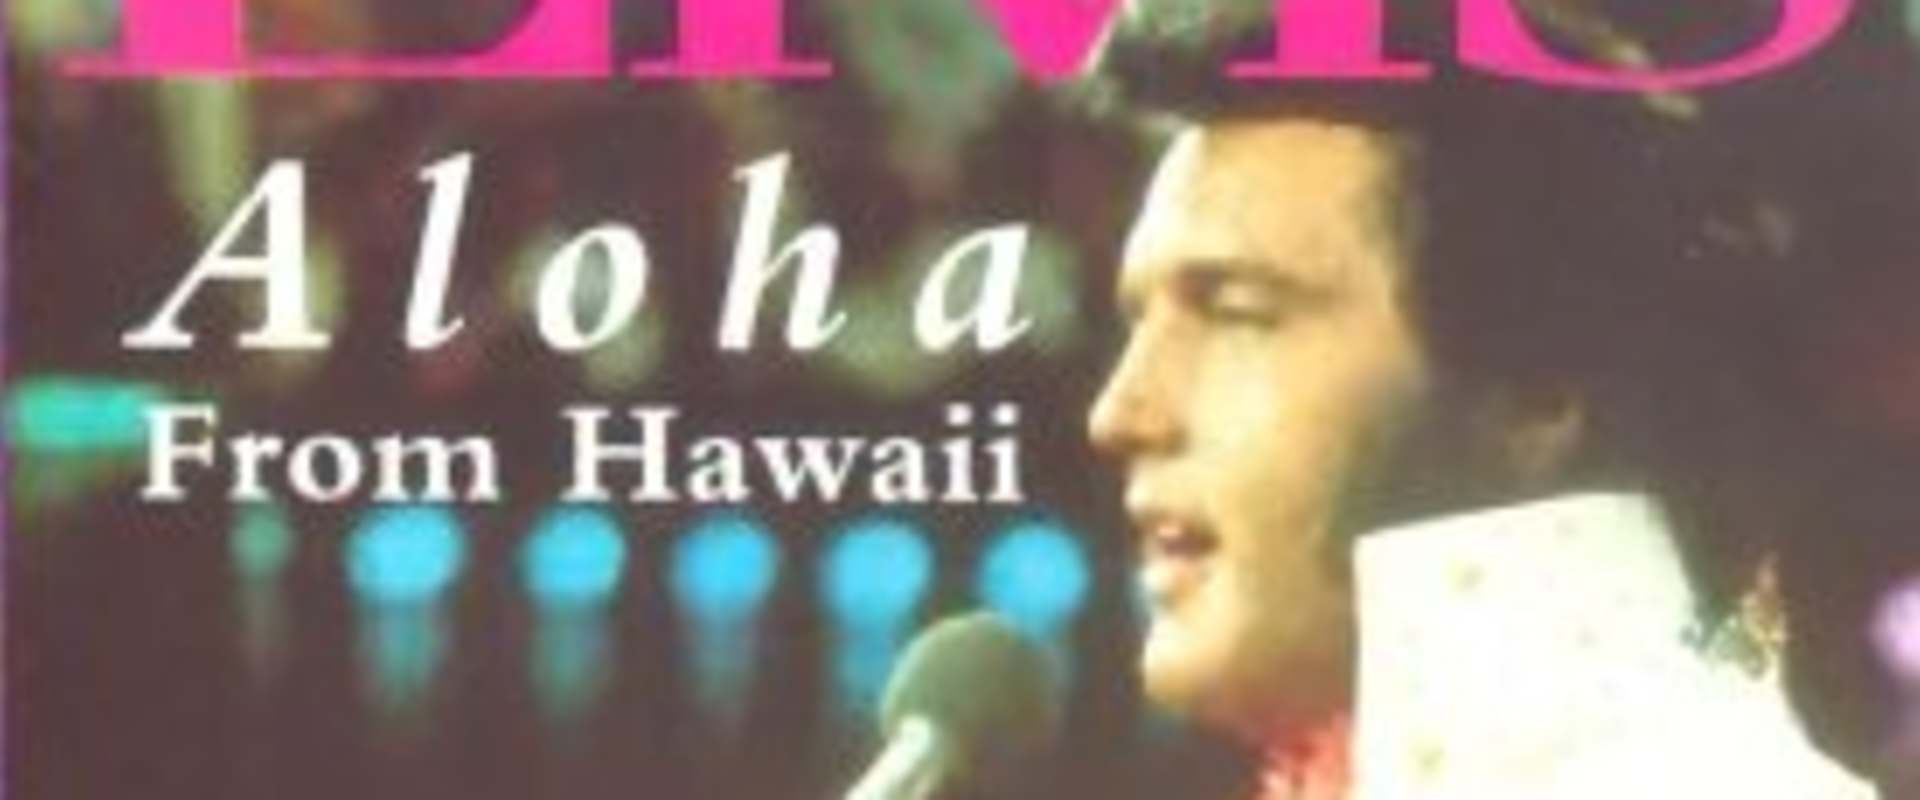 Elvis - Aloha from Hawaii background 1